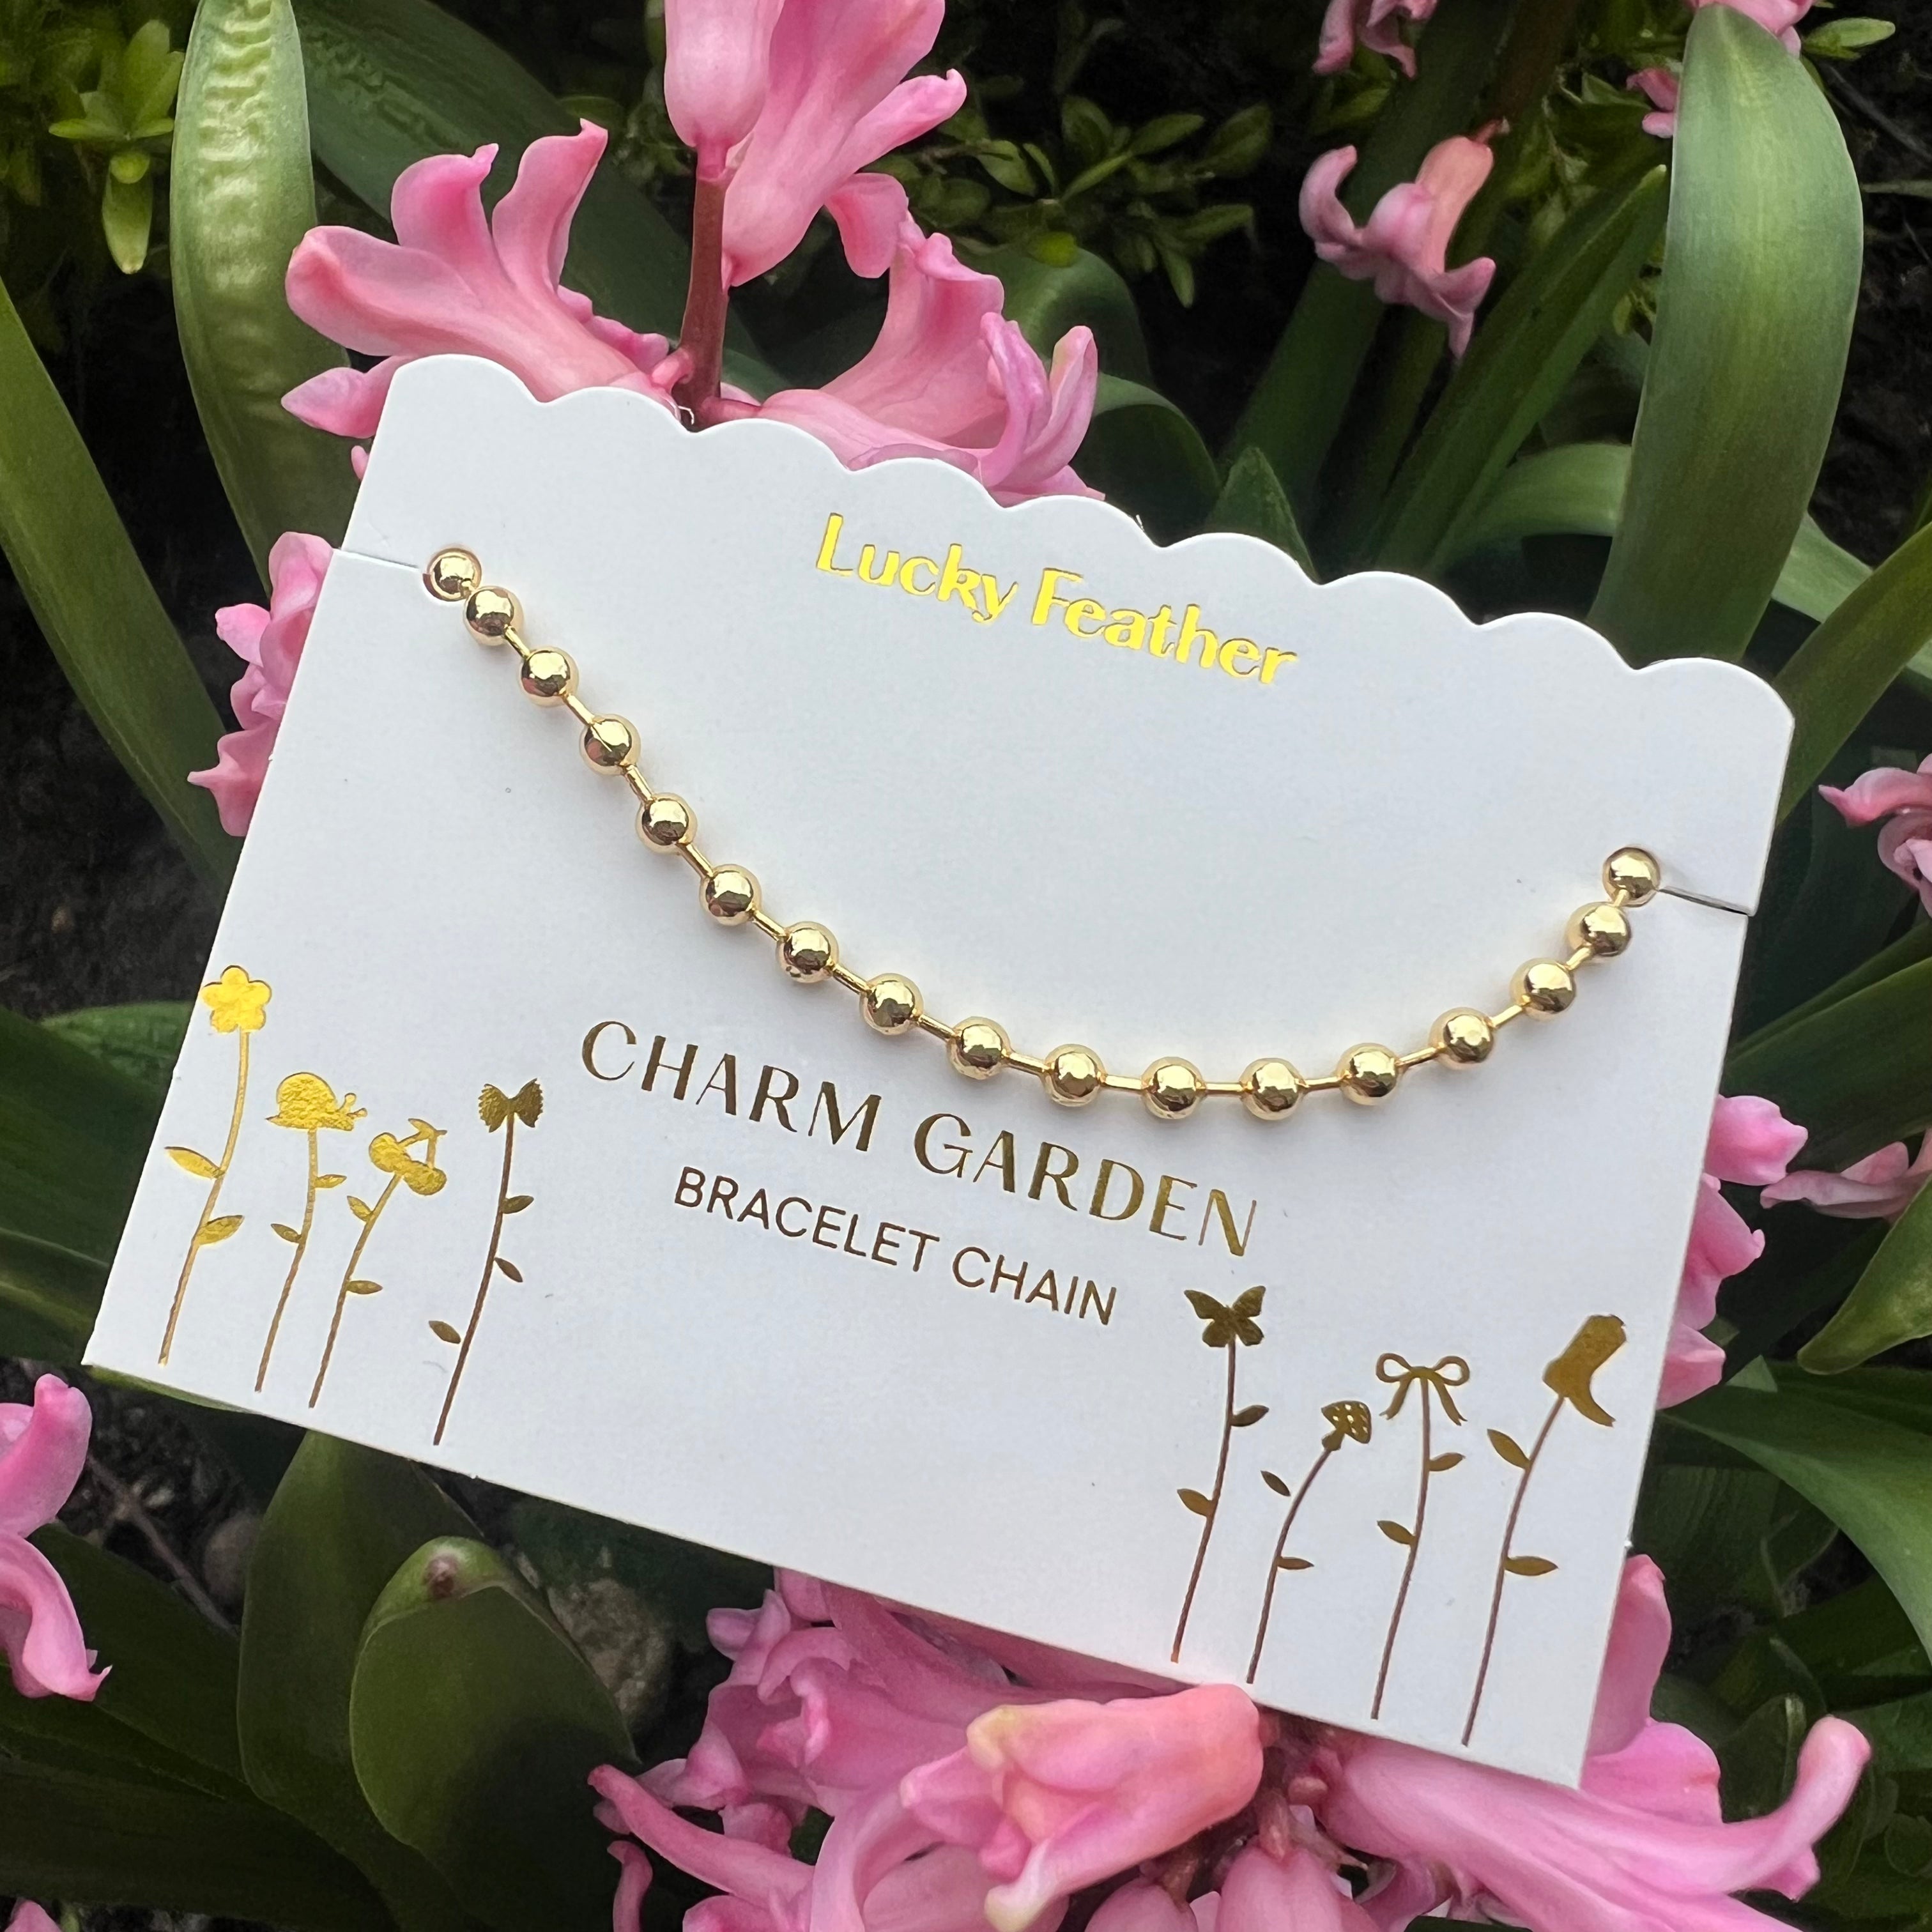 Lucky Feather - Charm Garden - Bracelet Chain - Gold